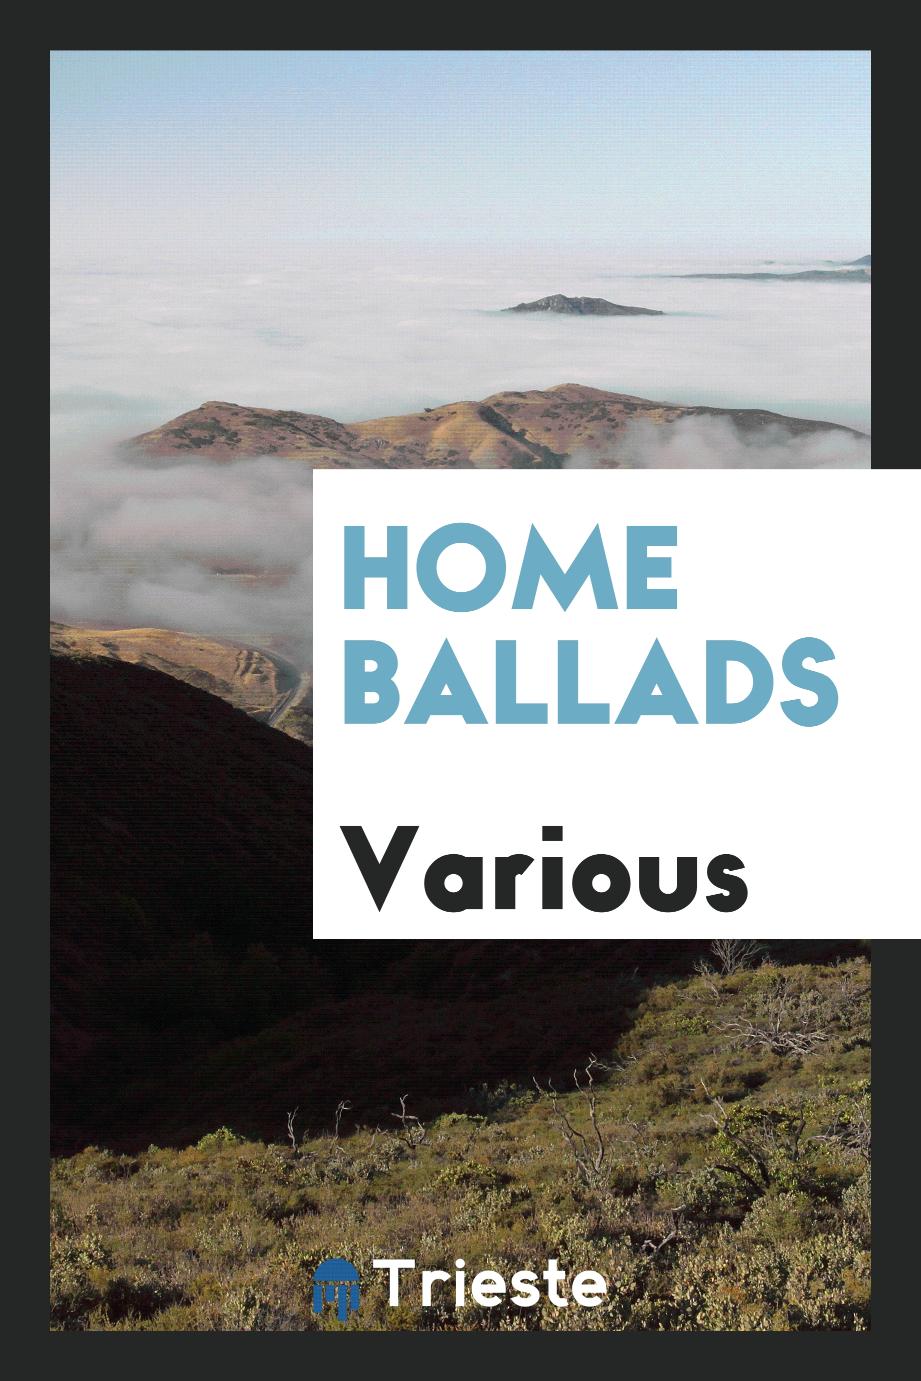 Home Ballads